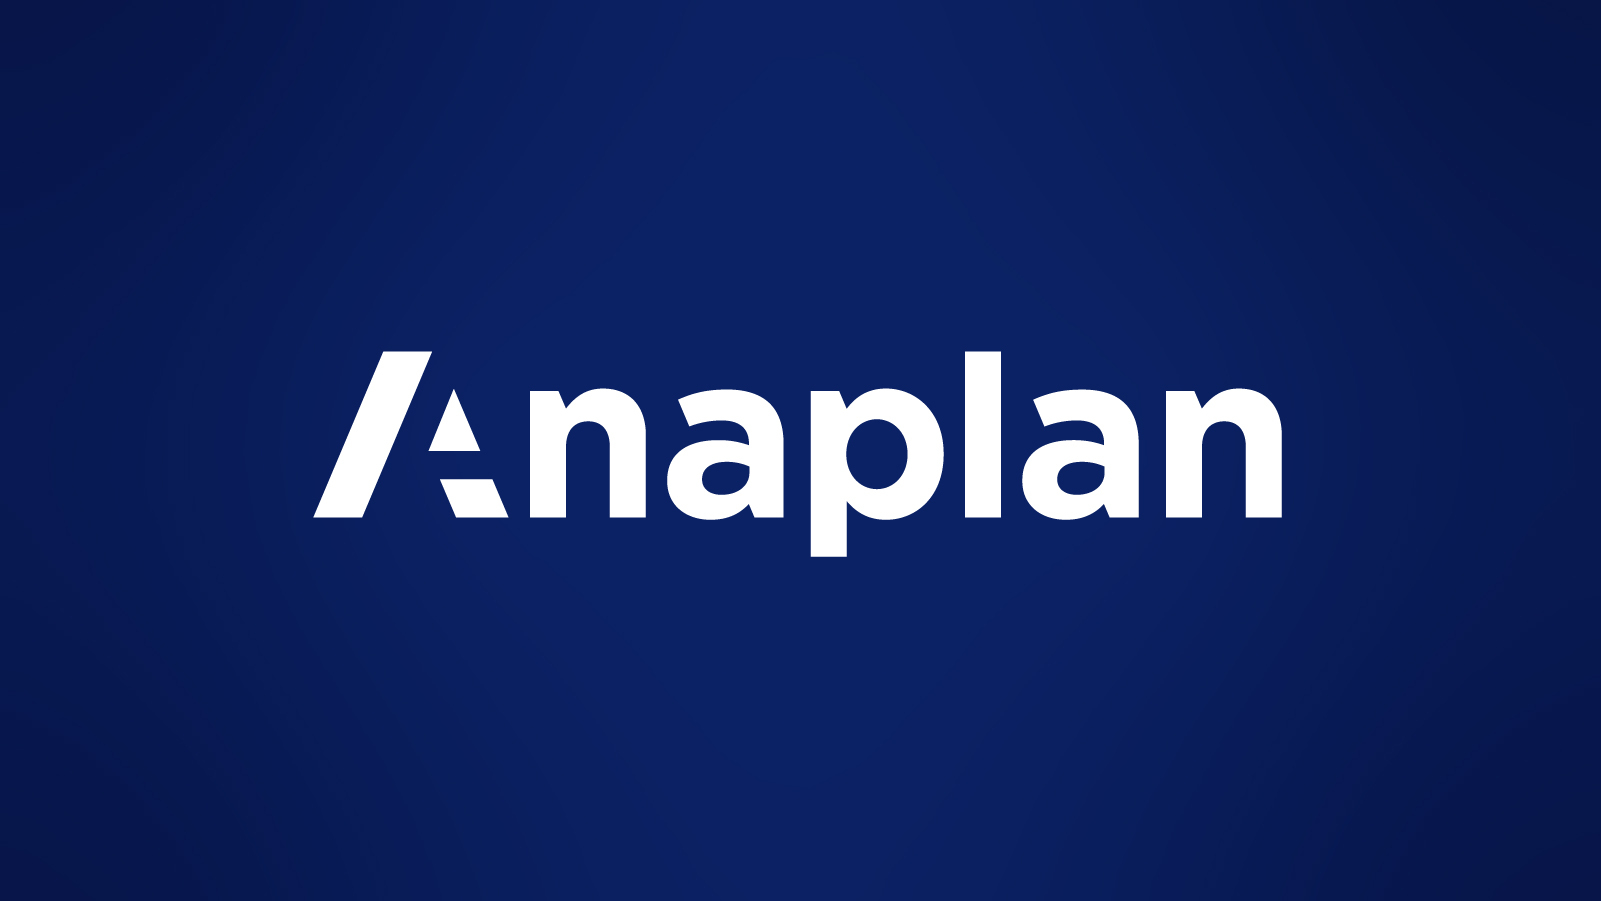 Graphic: Anaplan logo on navy blue